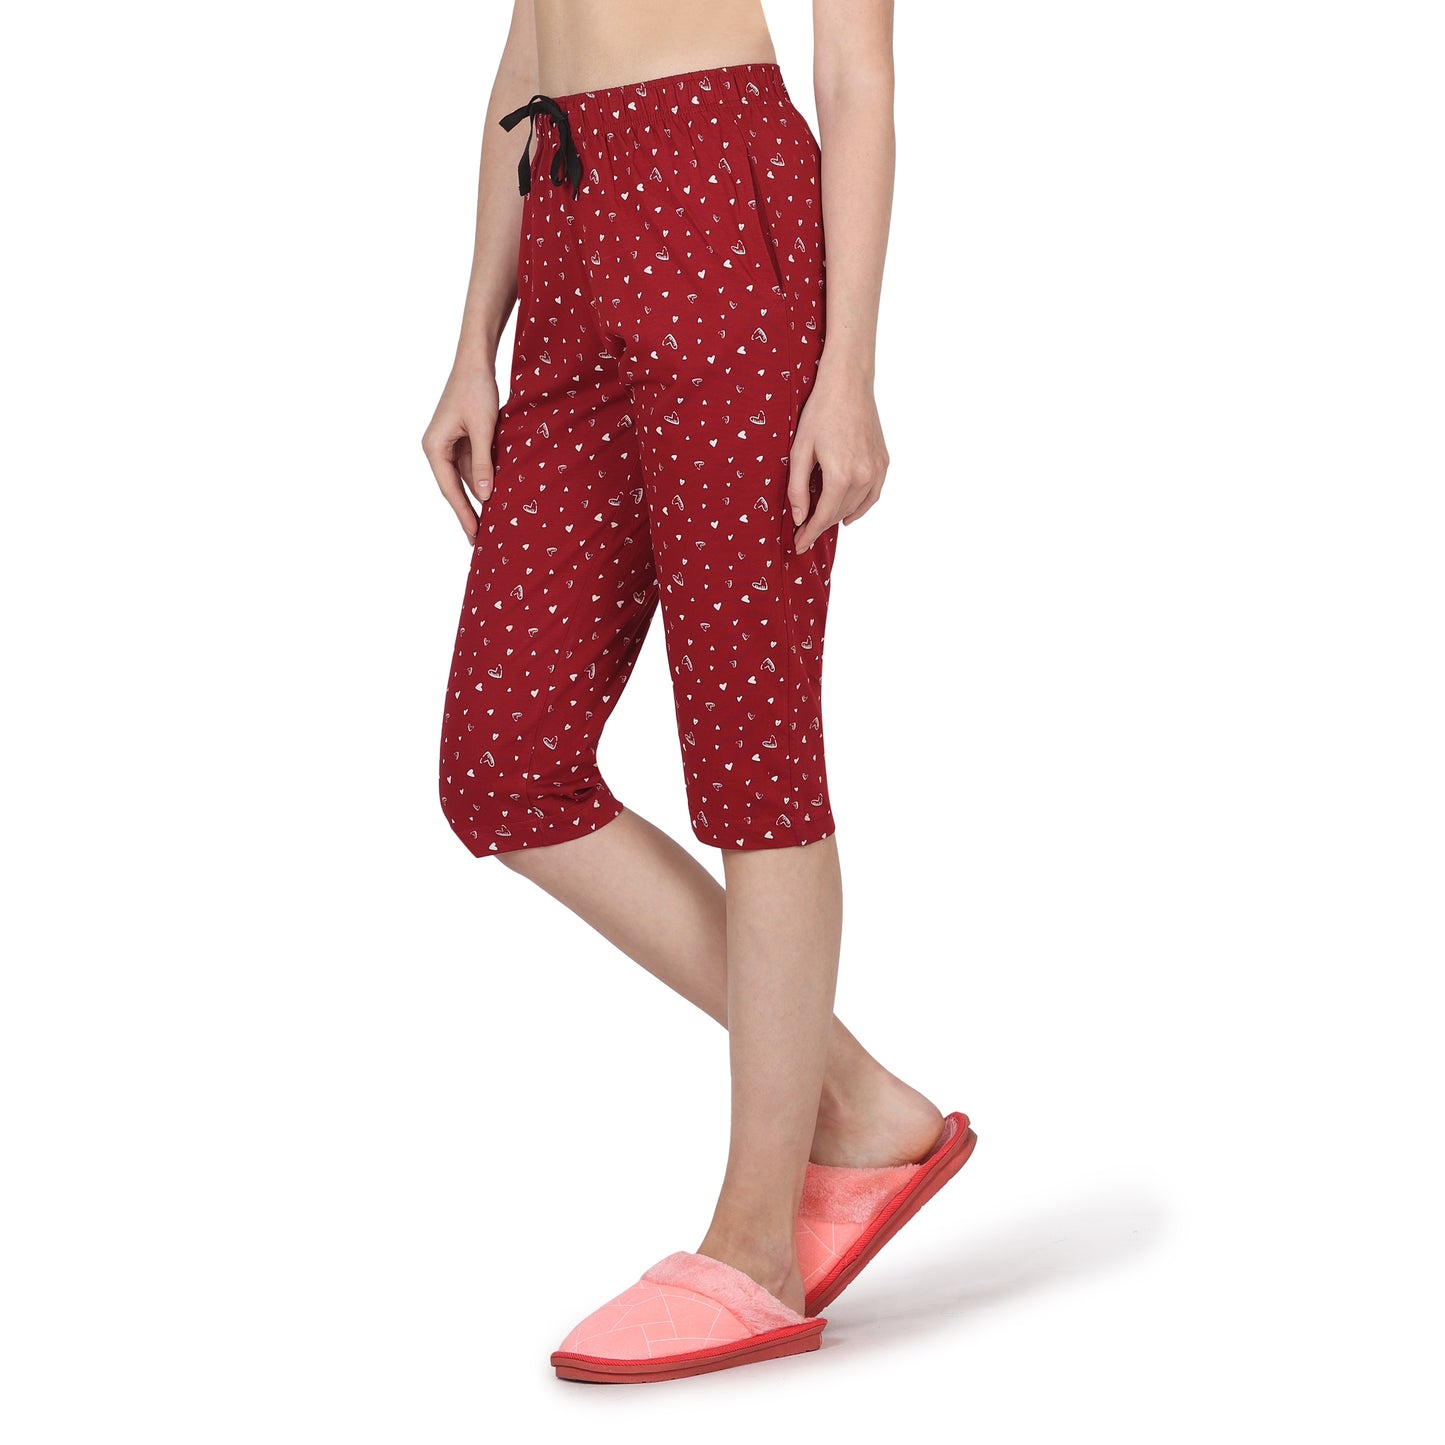 Eazy Women's Printed Capri Pants- Pack of 3- Black, Blush & Cherry Red